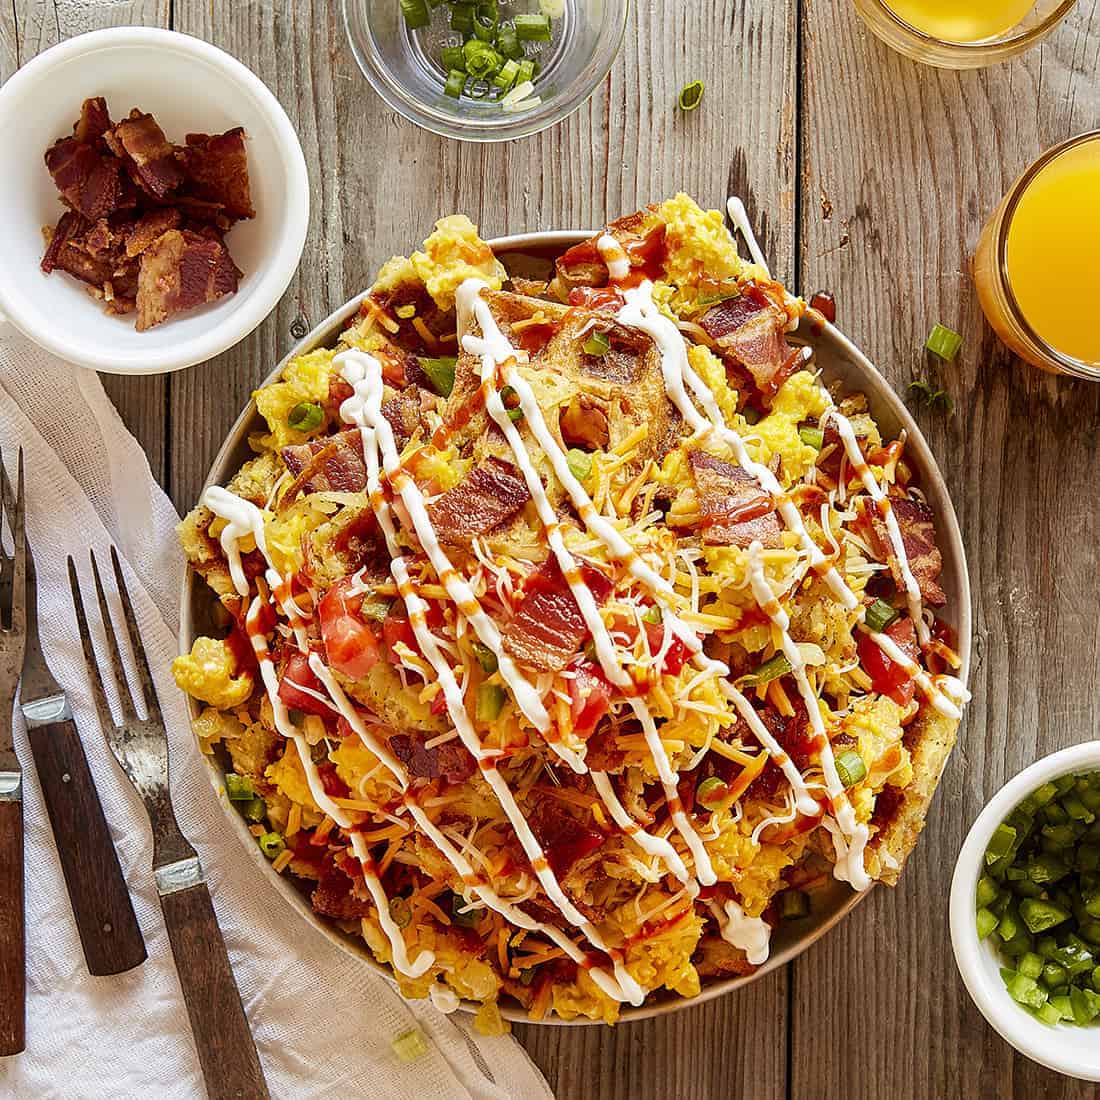 https://iambaker.net/wp-content/uploads/2019/08/hash-brown-breakfast-nachos-1-smaller.jpg